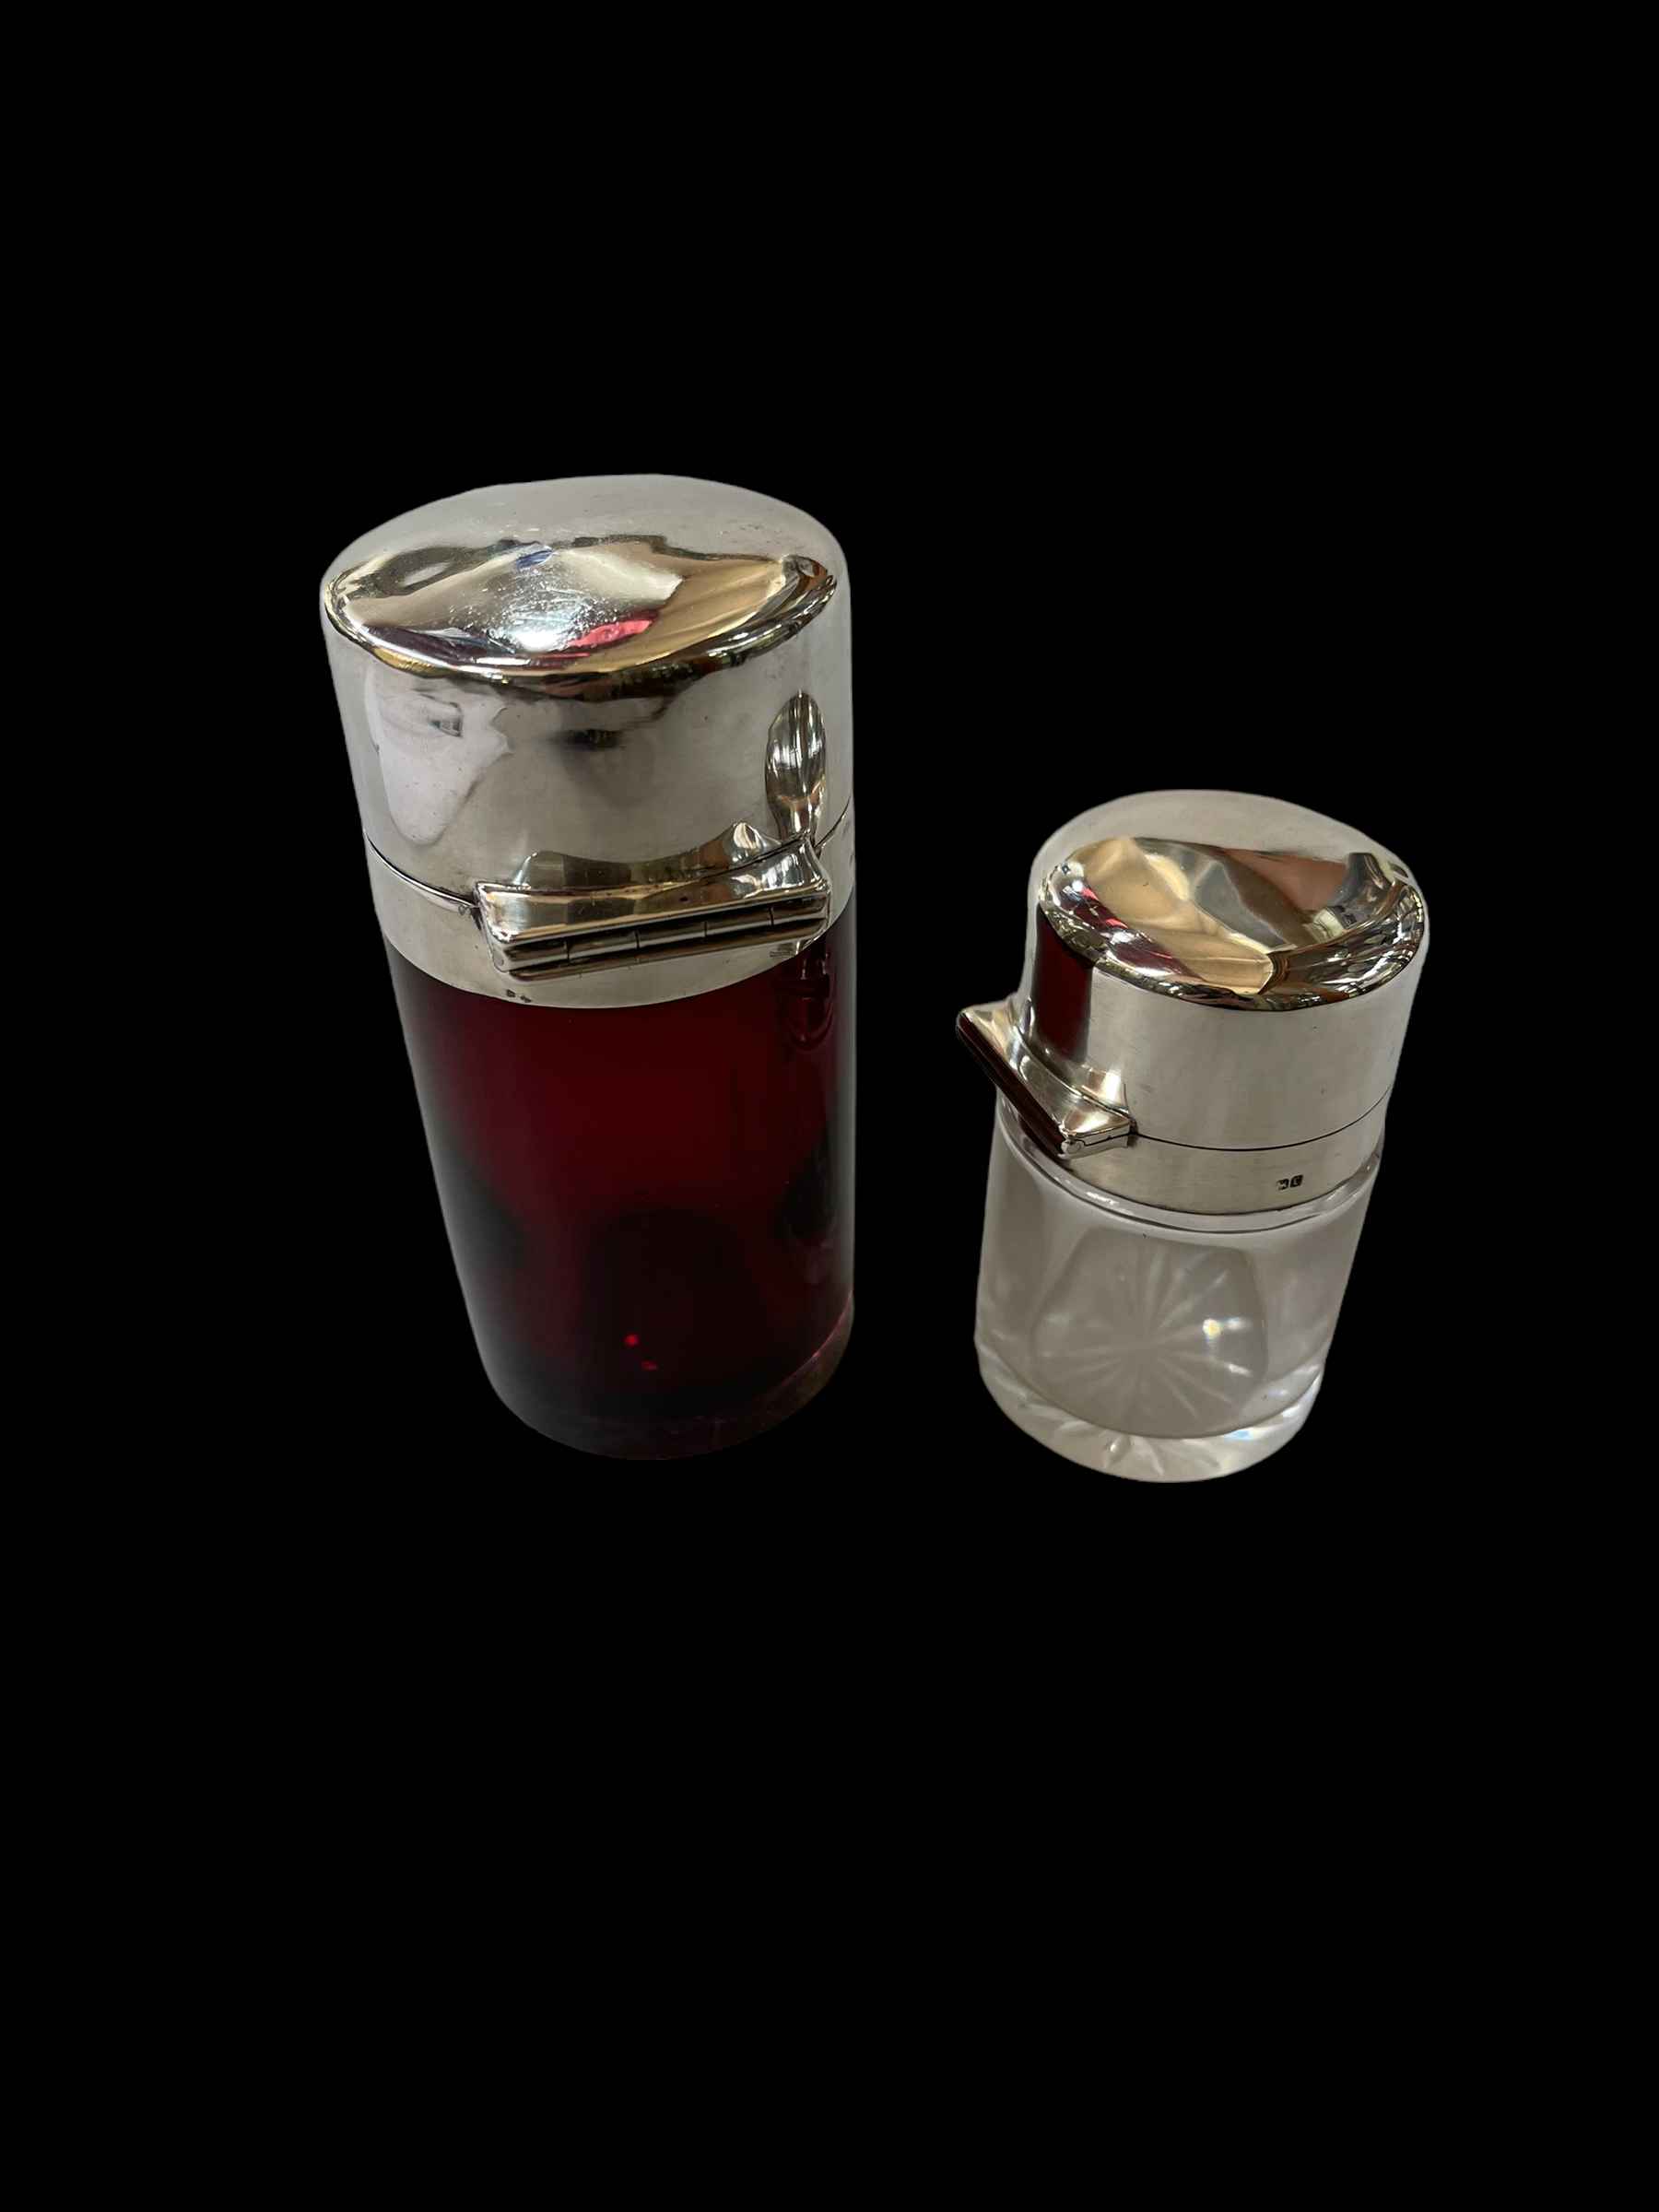 Silver mounted ruby glass smelling salts bottle, Birmingham 1911,